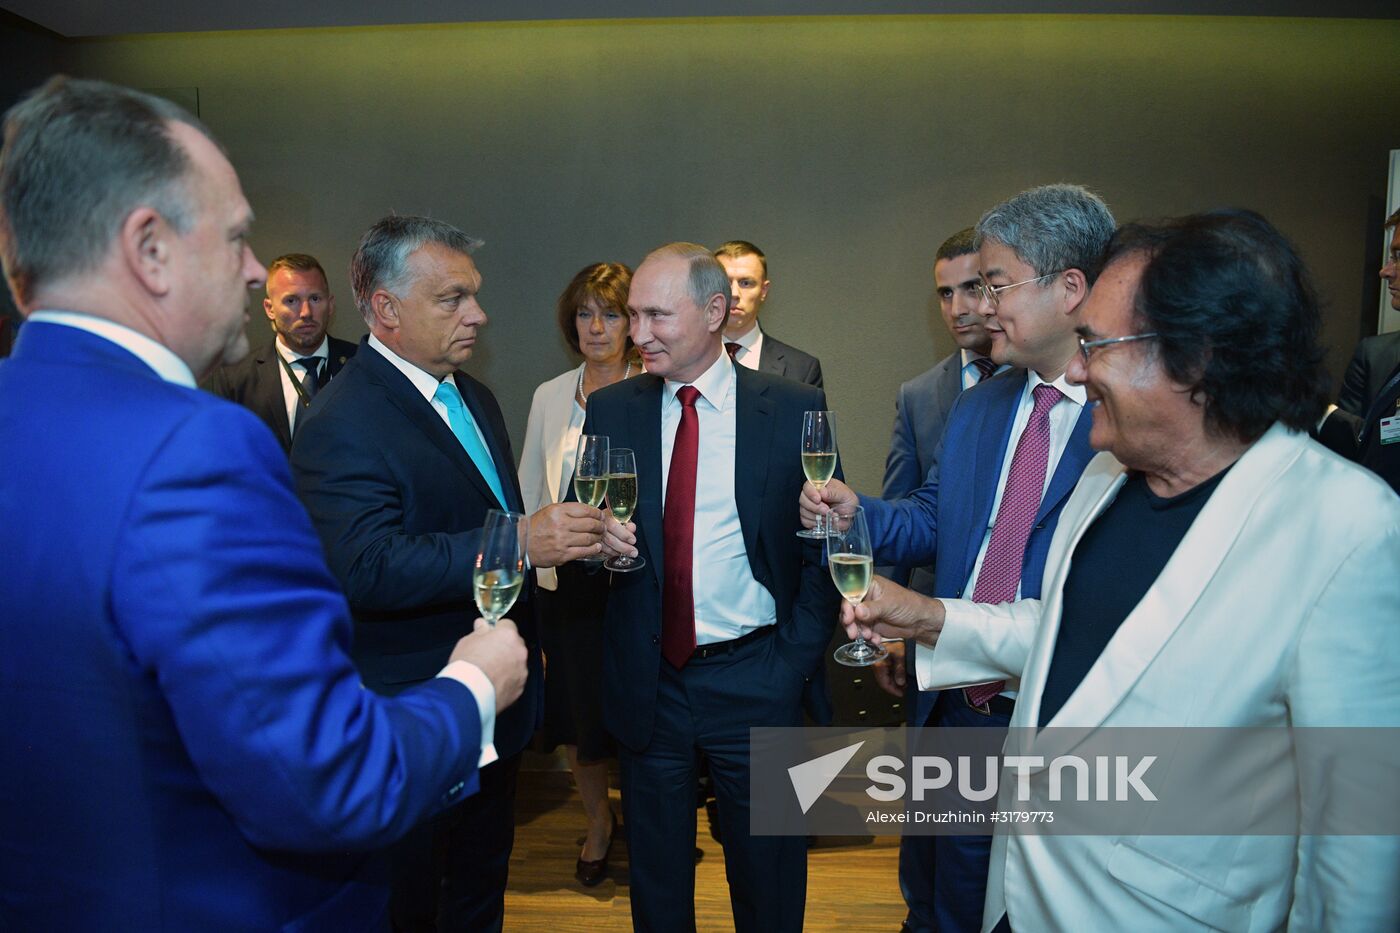 President Vladimir Putin visits Hungary